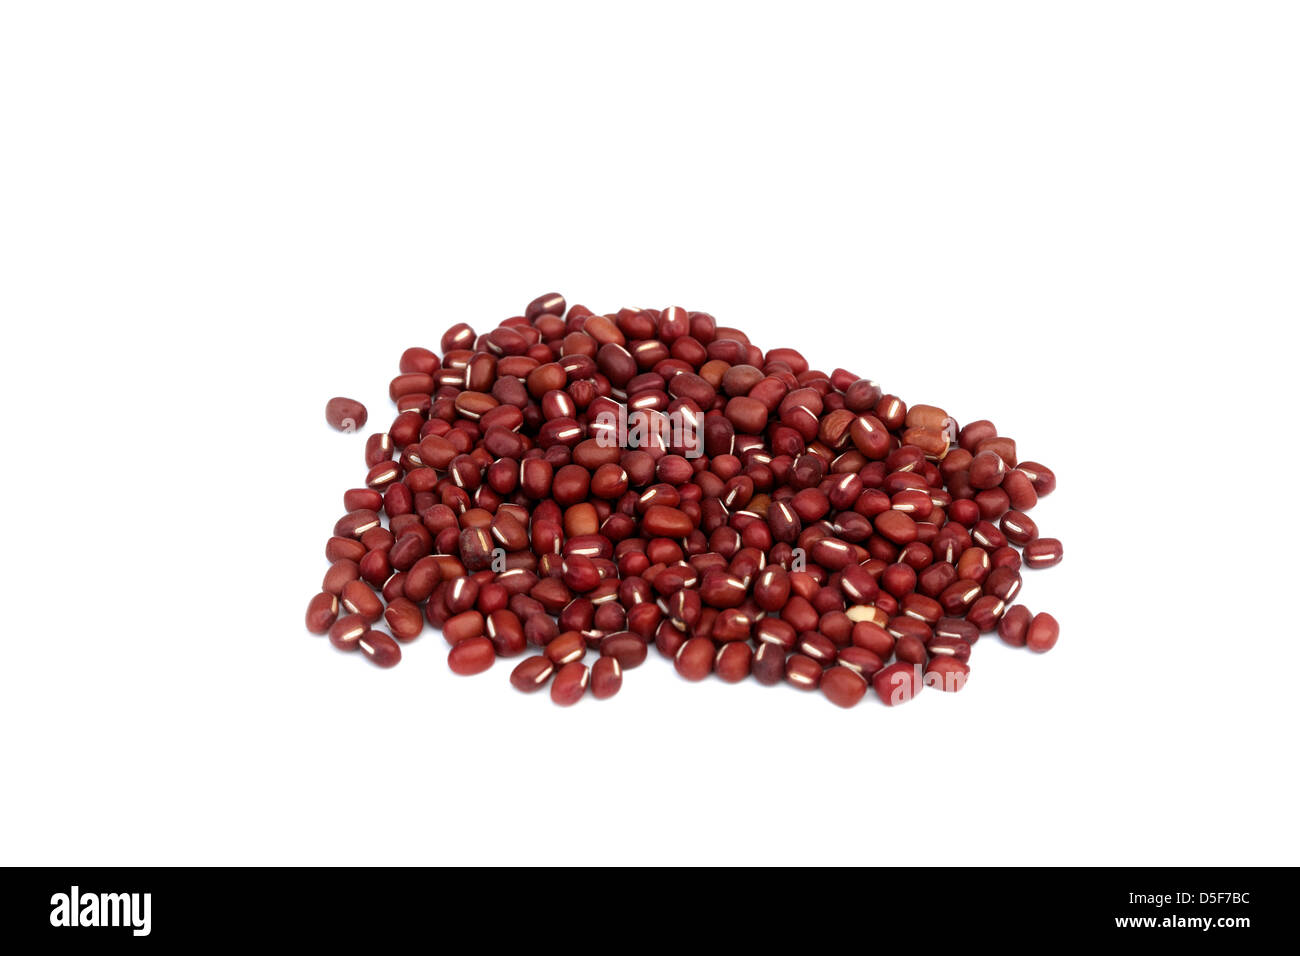 Aduki beans or adzuki beans. Stock Photo